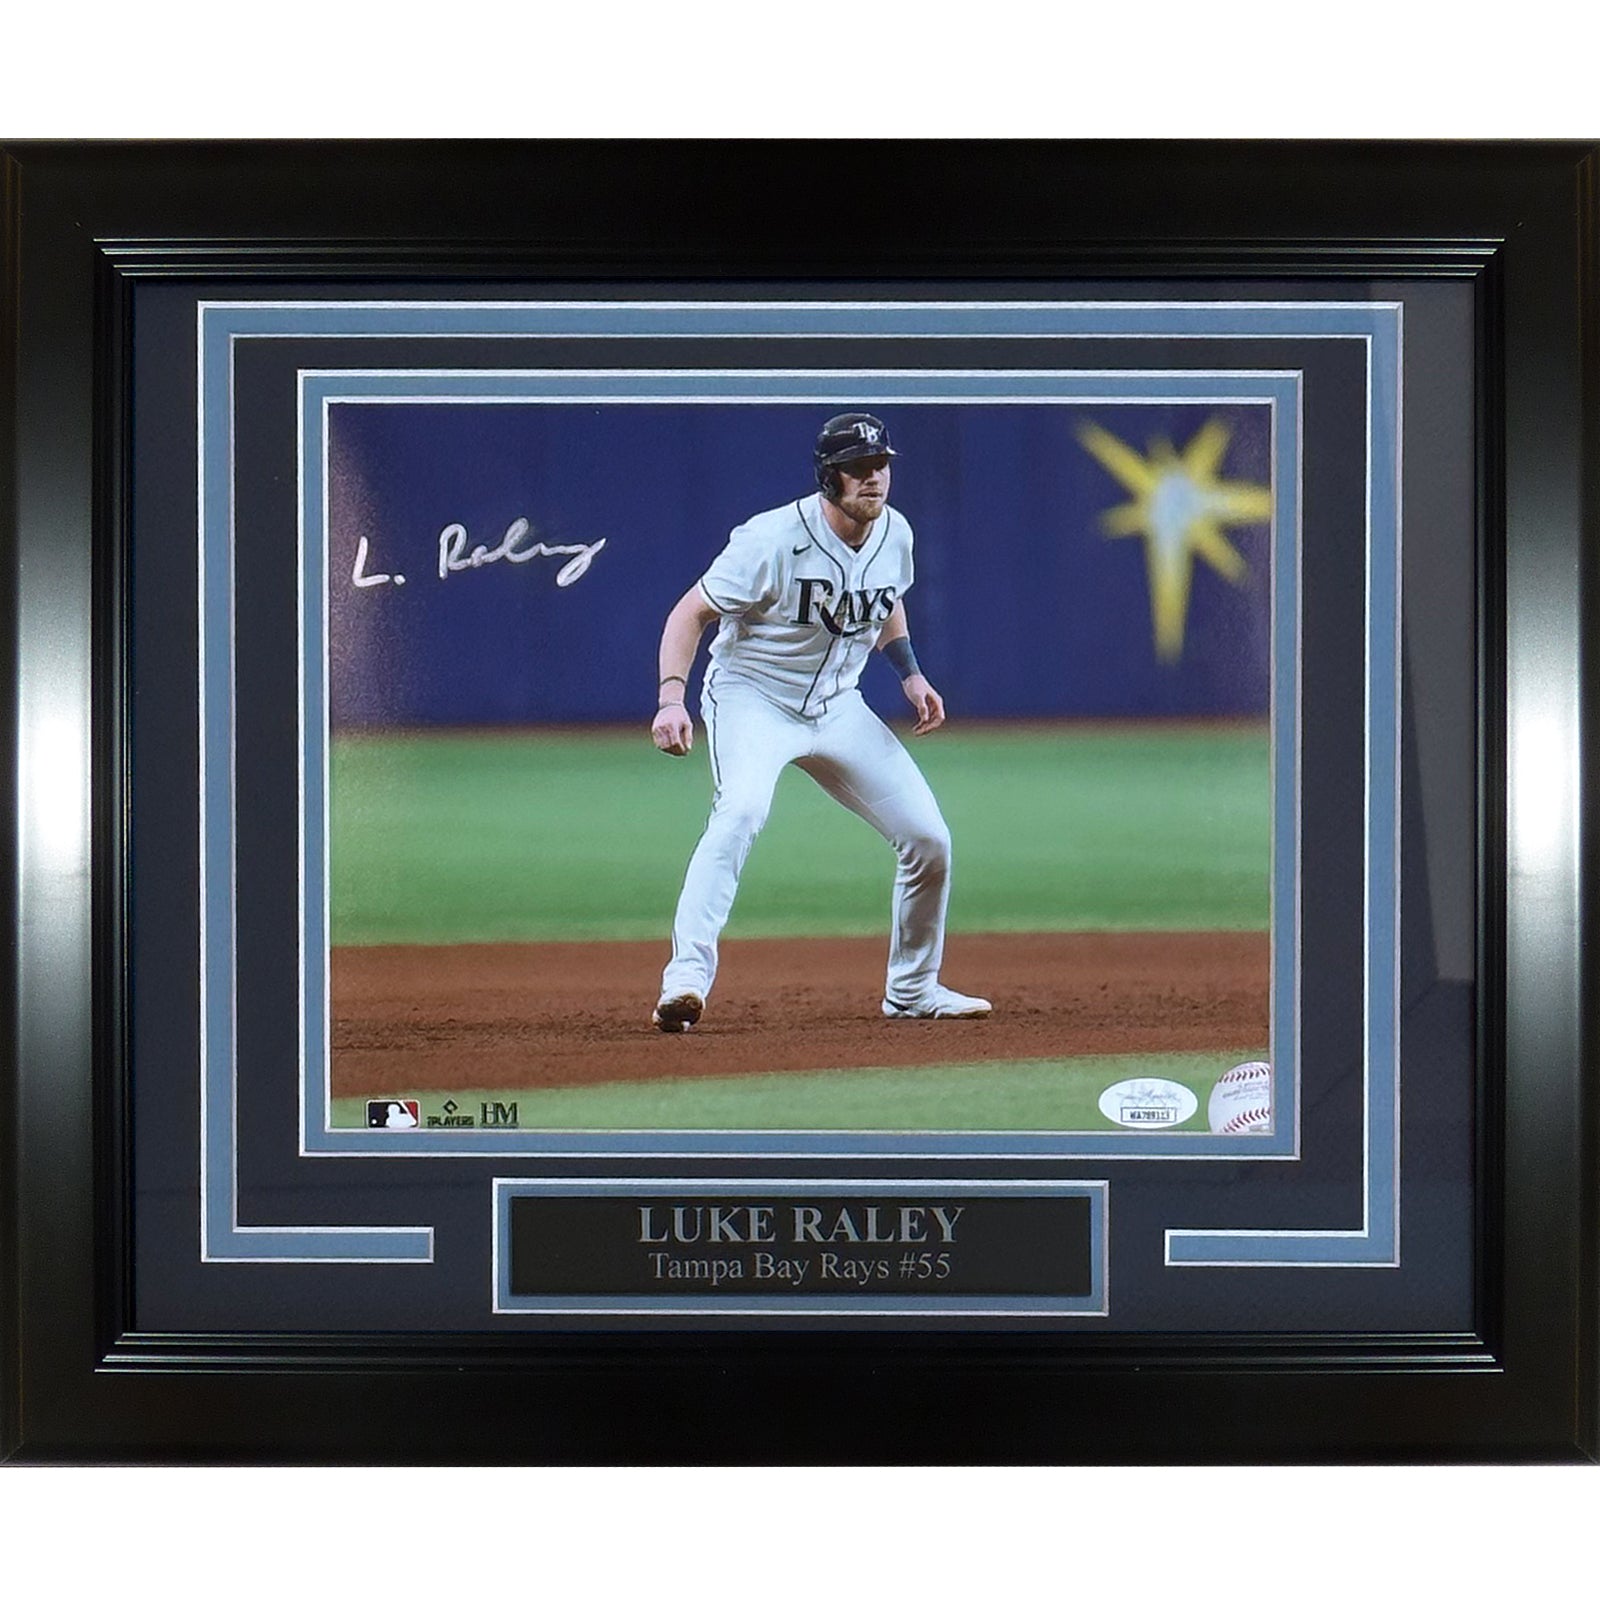 Luke Raley Autographed Tampa Bay Rays (Running Horizontal) Framed 8x10 Photo - JSA